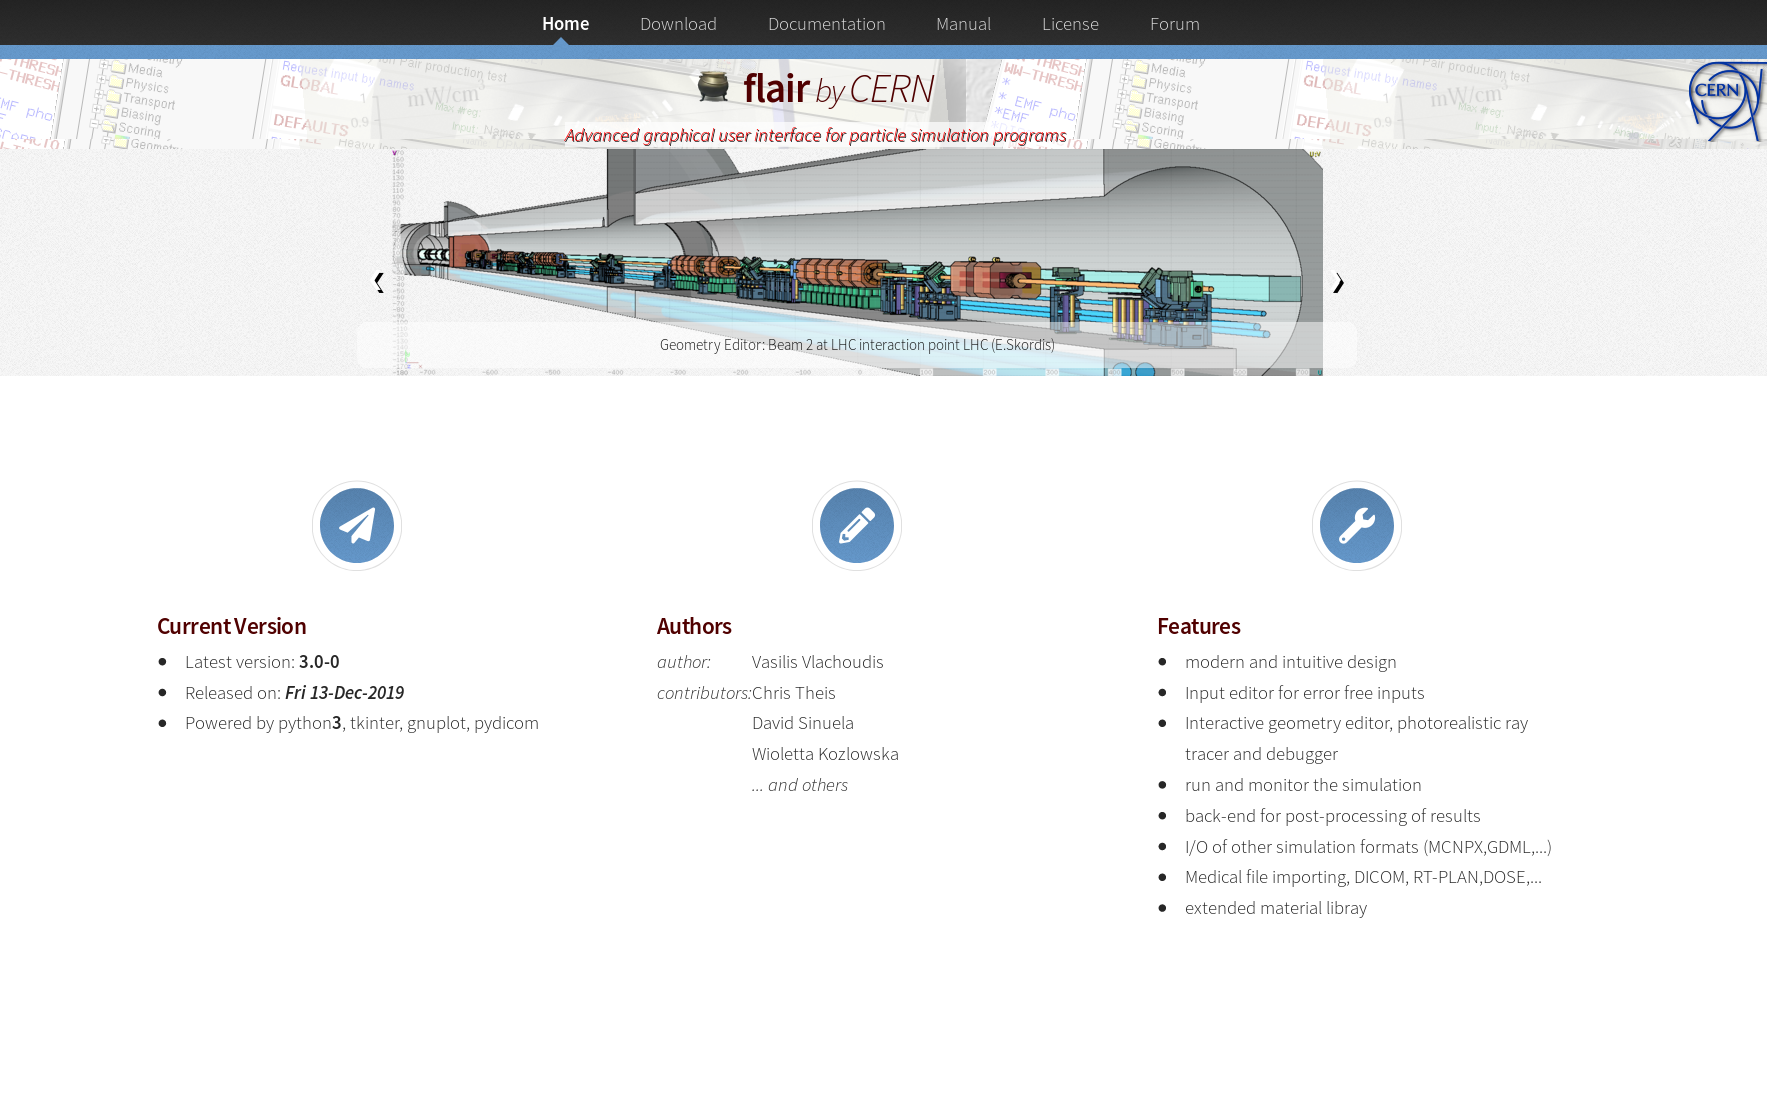 New CERN Flair website